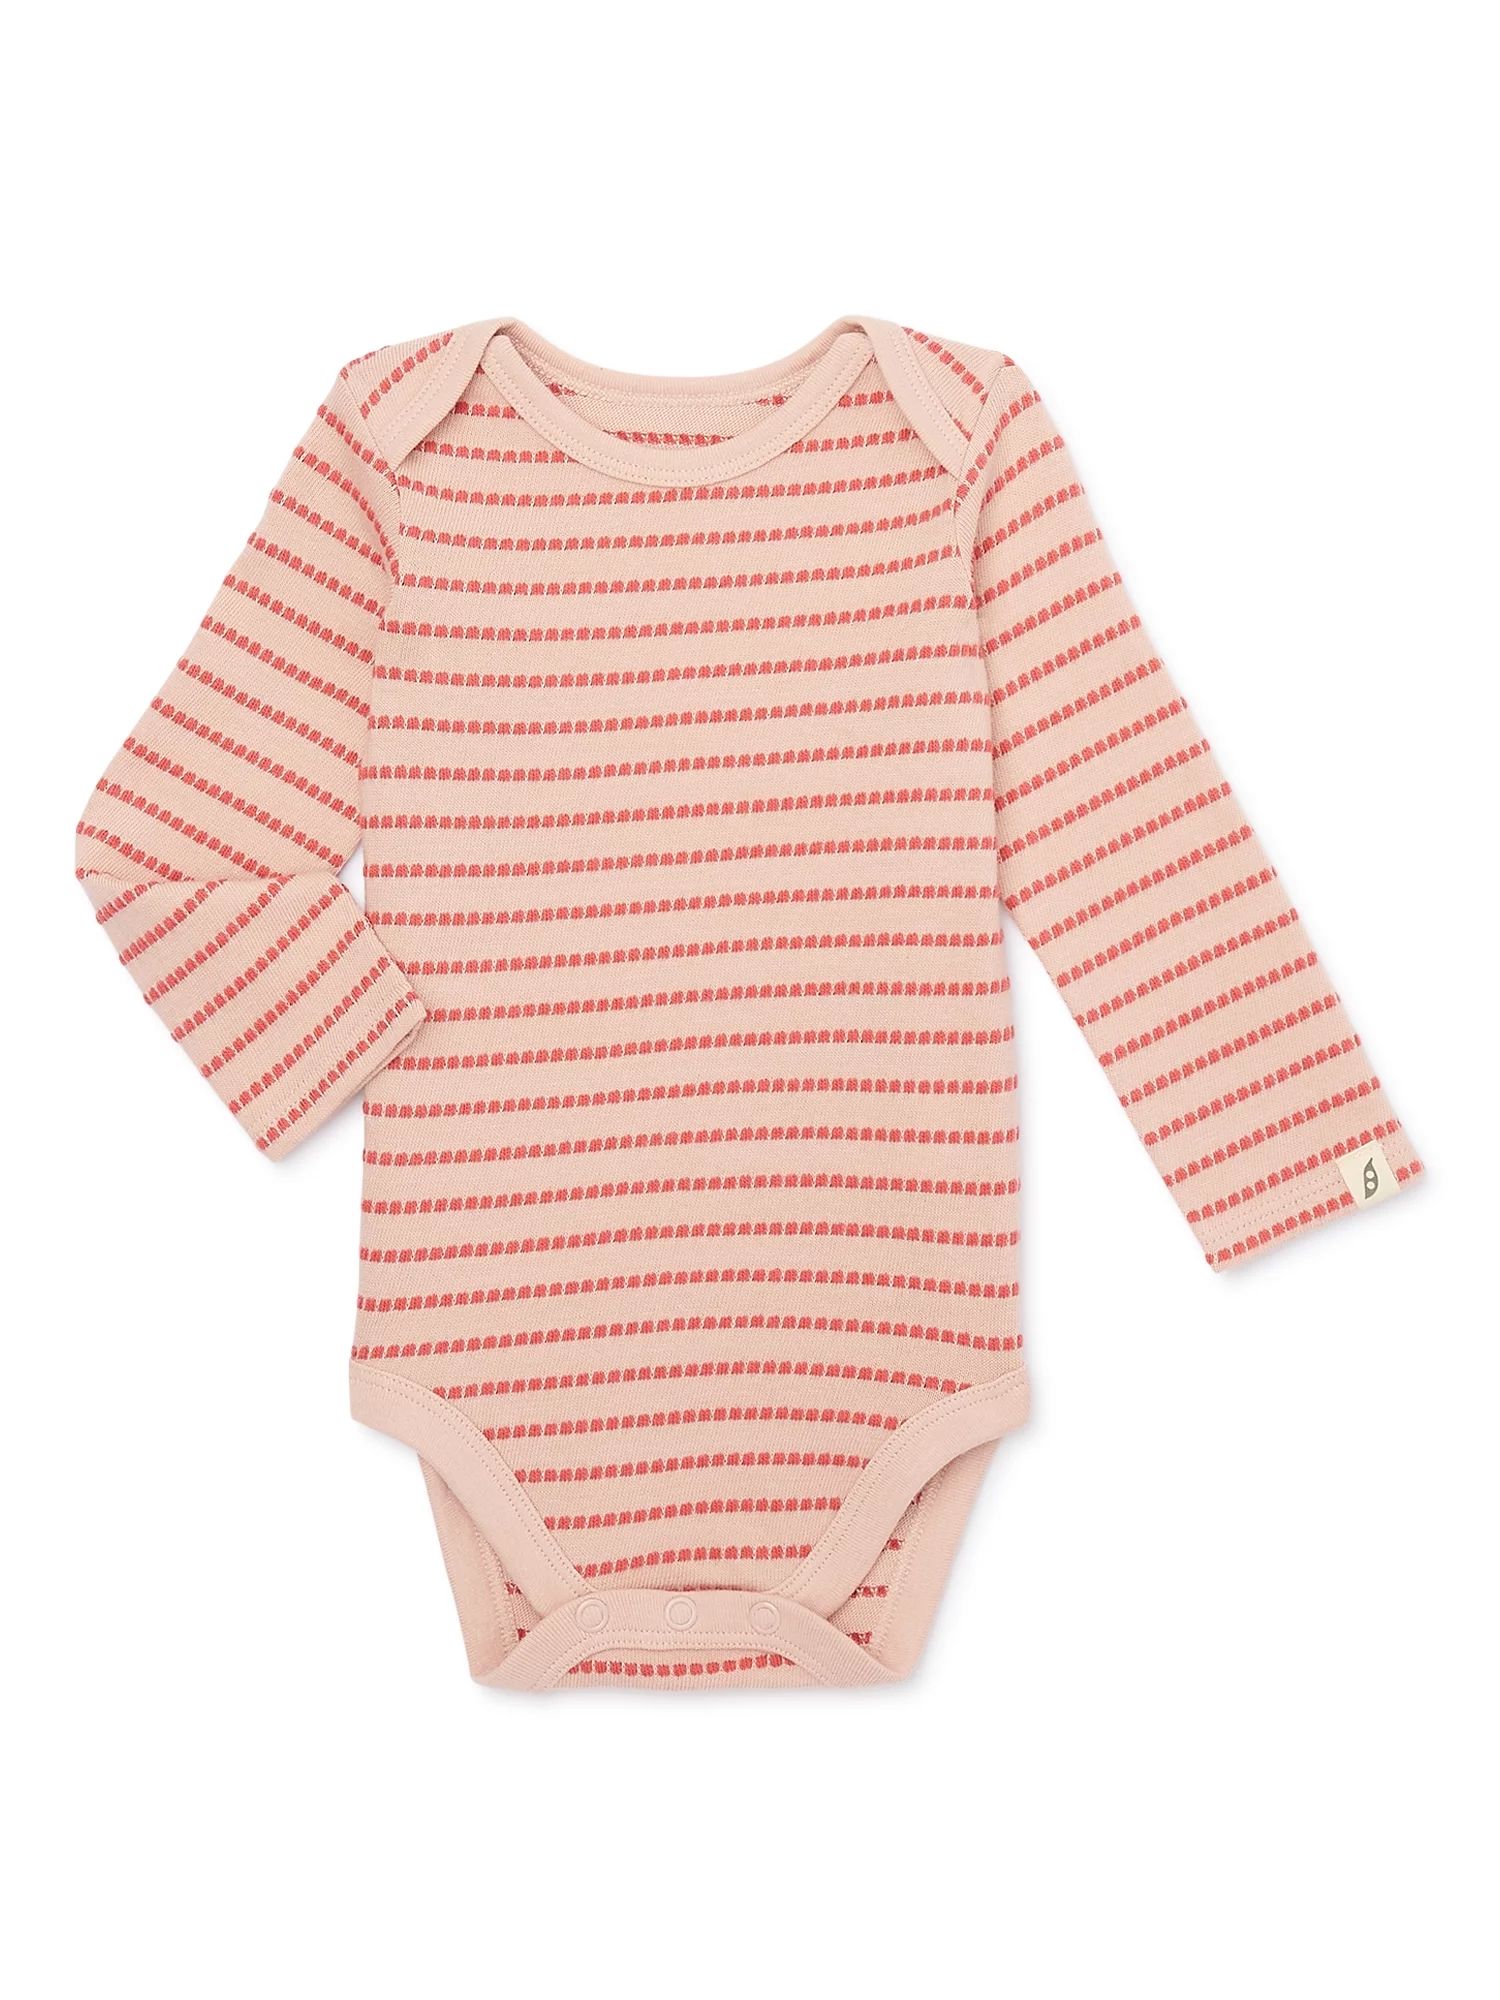 easy-peasy Baby Long Sleeve Textured Bodysuit, Sizes 0-24 Months | Walmart (US)